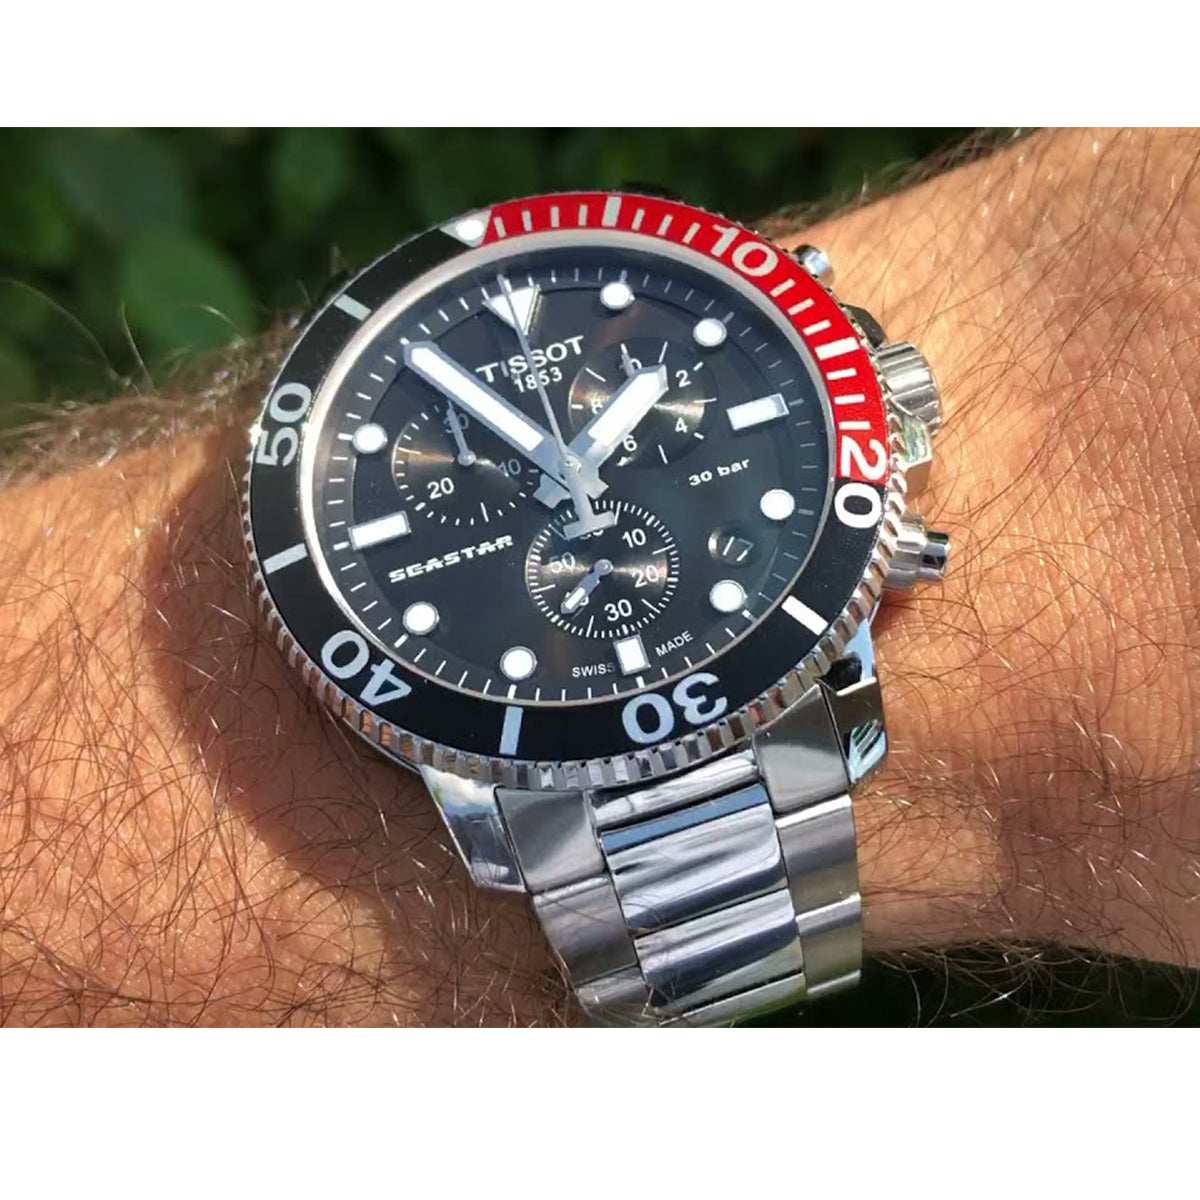 Tissot Seaster 1000 Chronograph Quartz Black Dial Silver Steel Strap Watch For Men - T120.417.11.051.01